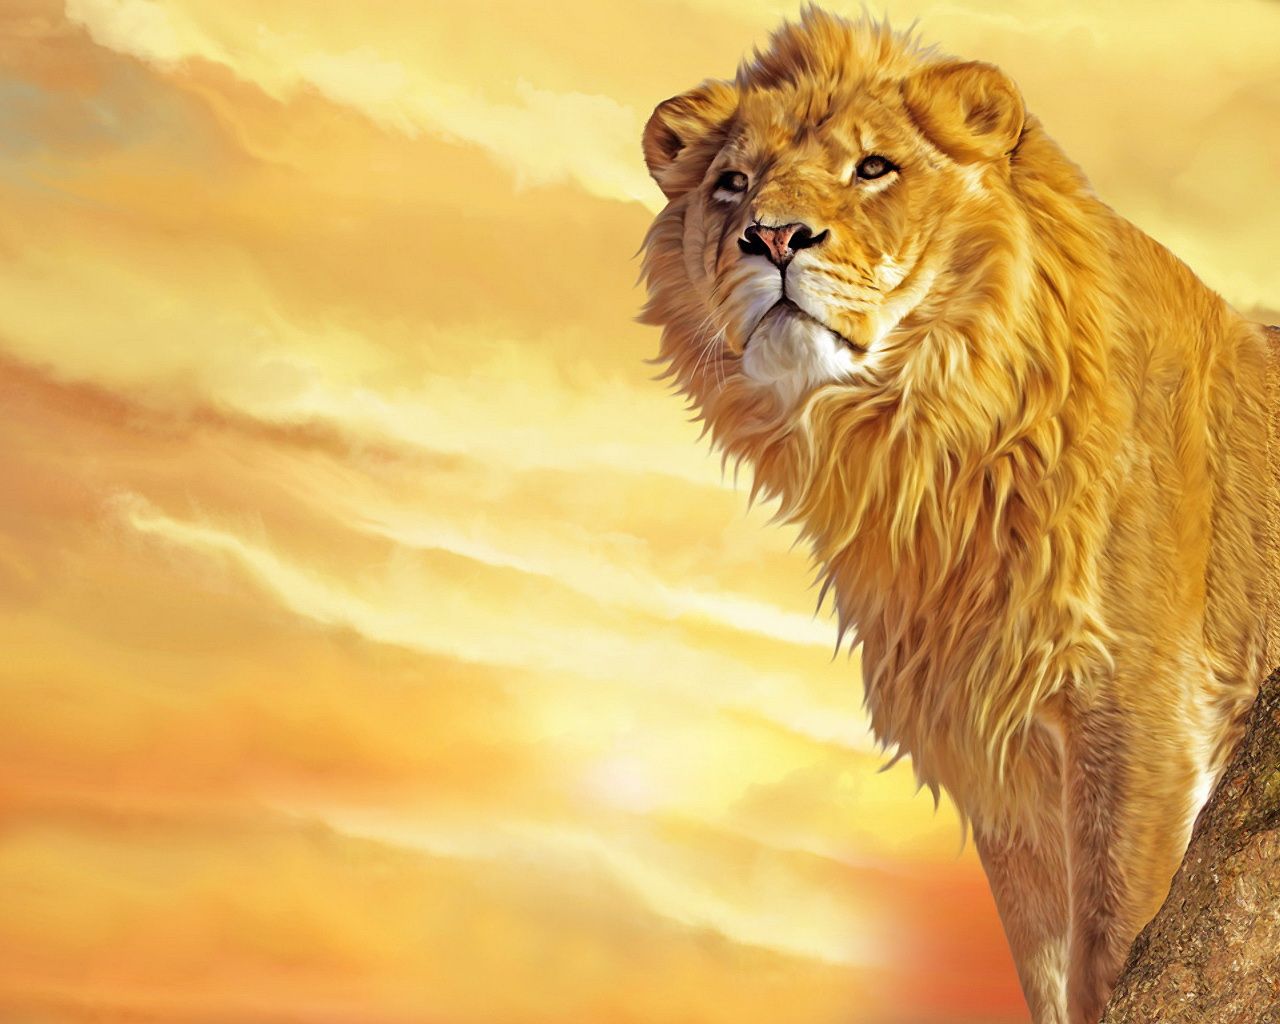 Lion Background. Lion King Disney Wallpaper, Amazing Lion Wallpaper and Dandelion Wallpaper